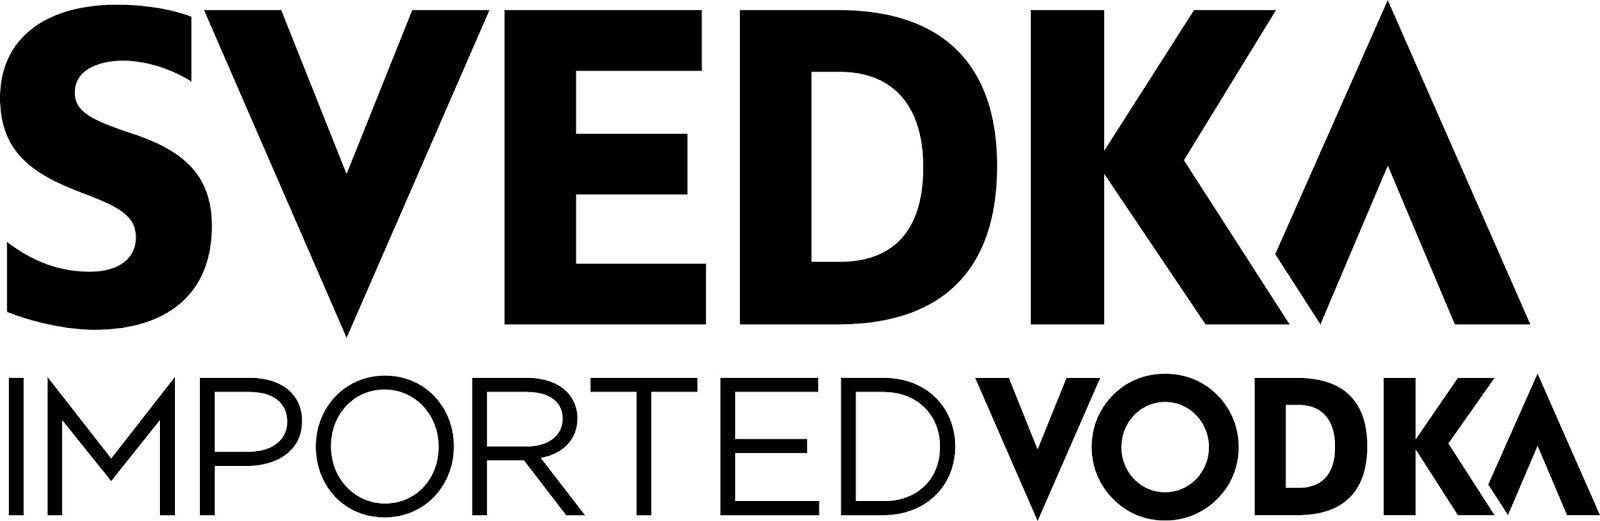 SVEDKA Logo - Svedka Logo in Black - Red Dress Party San Diego